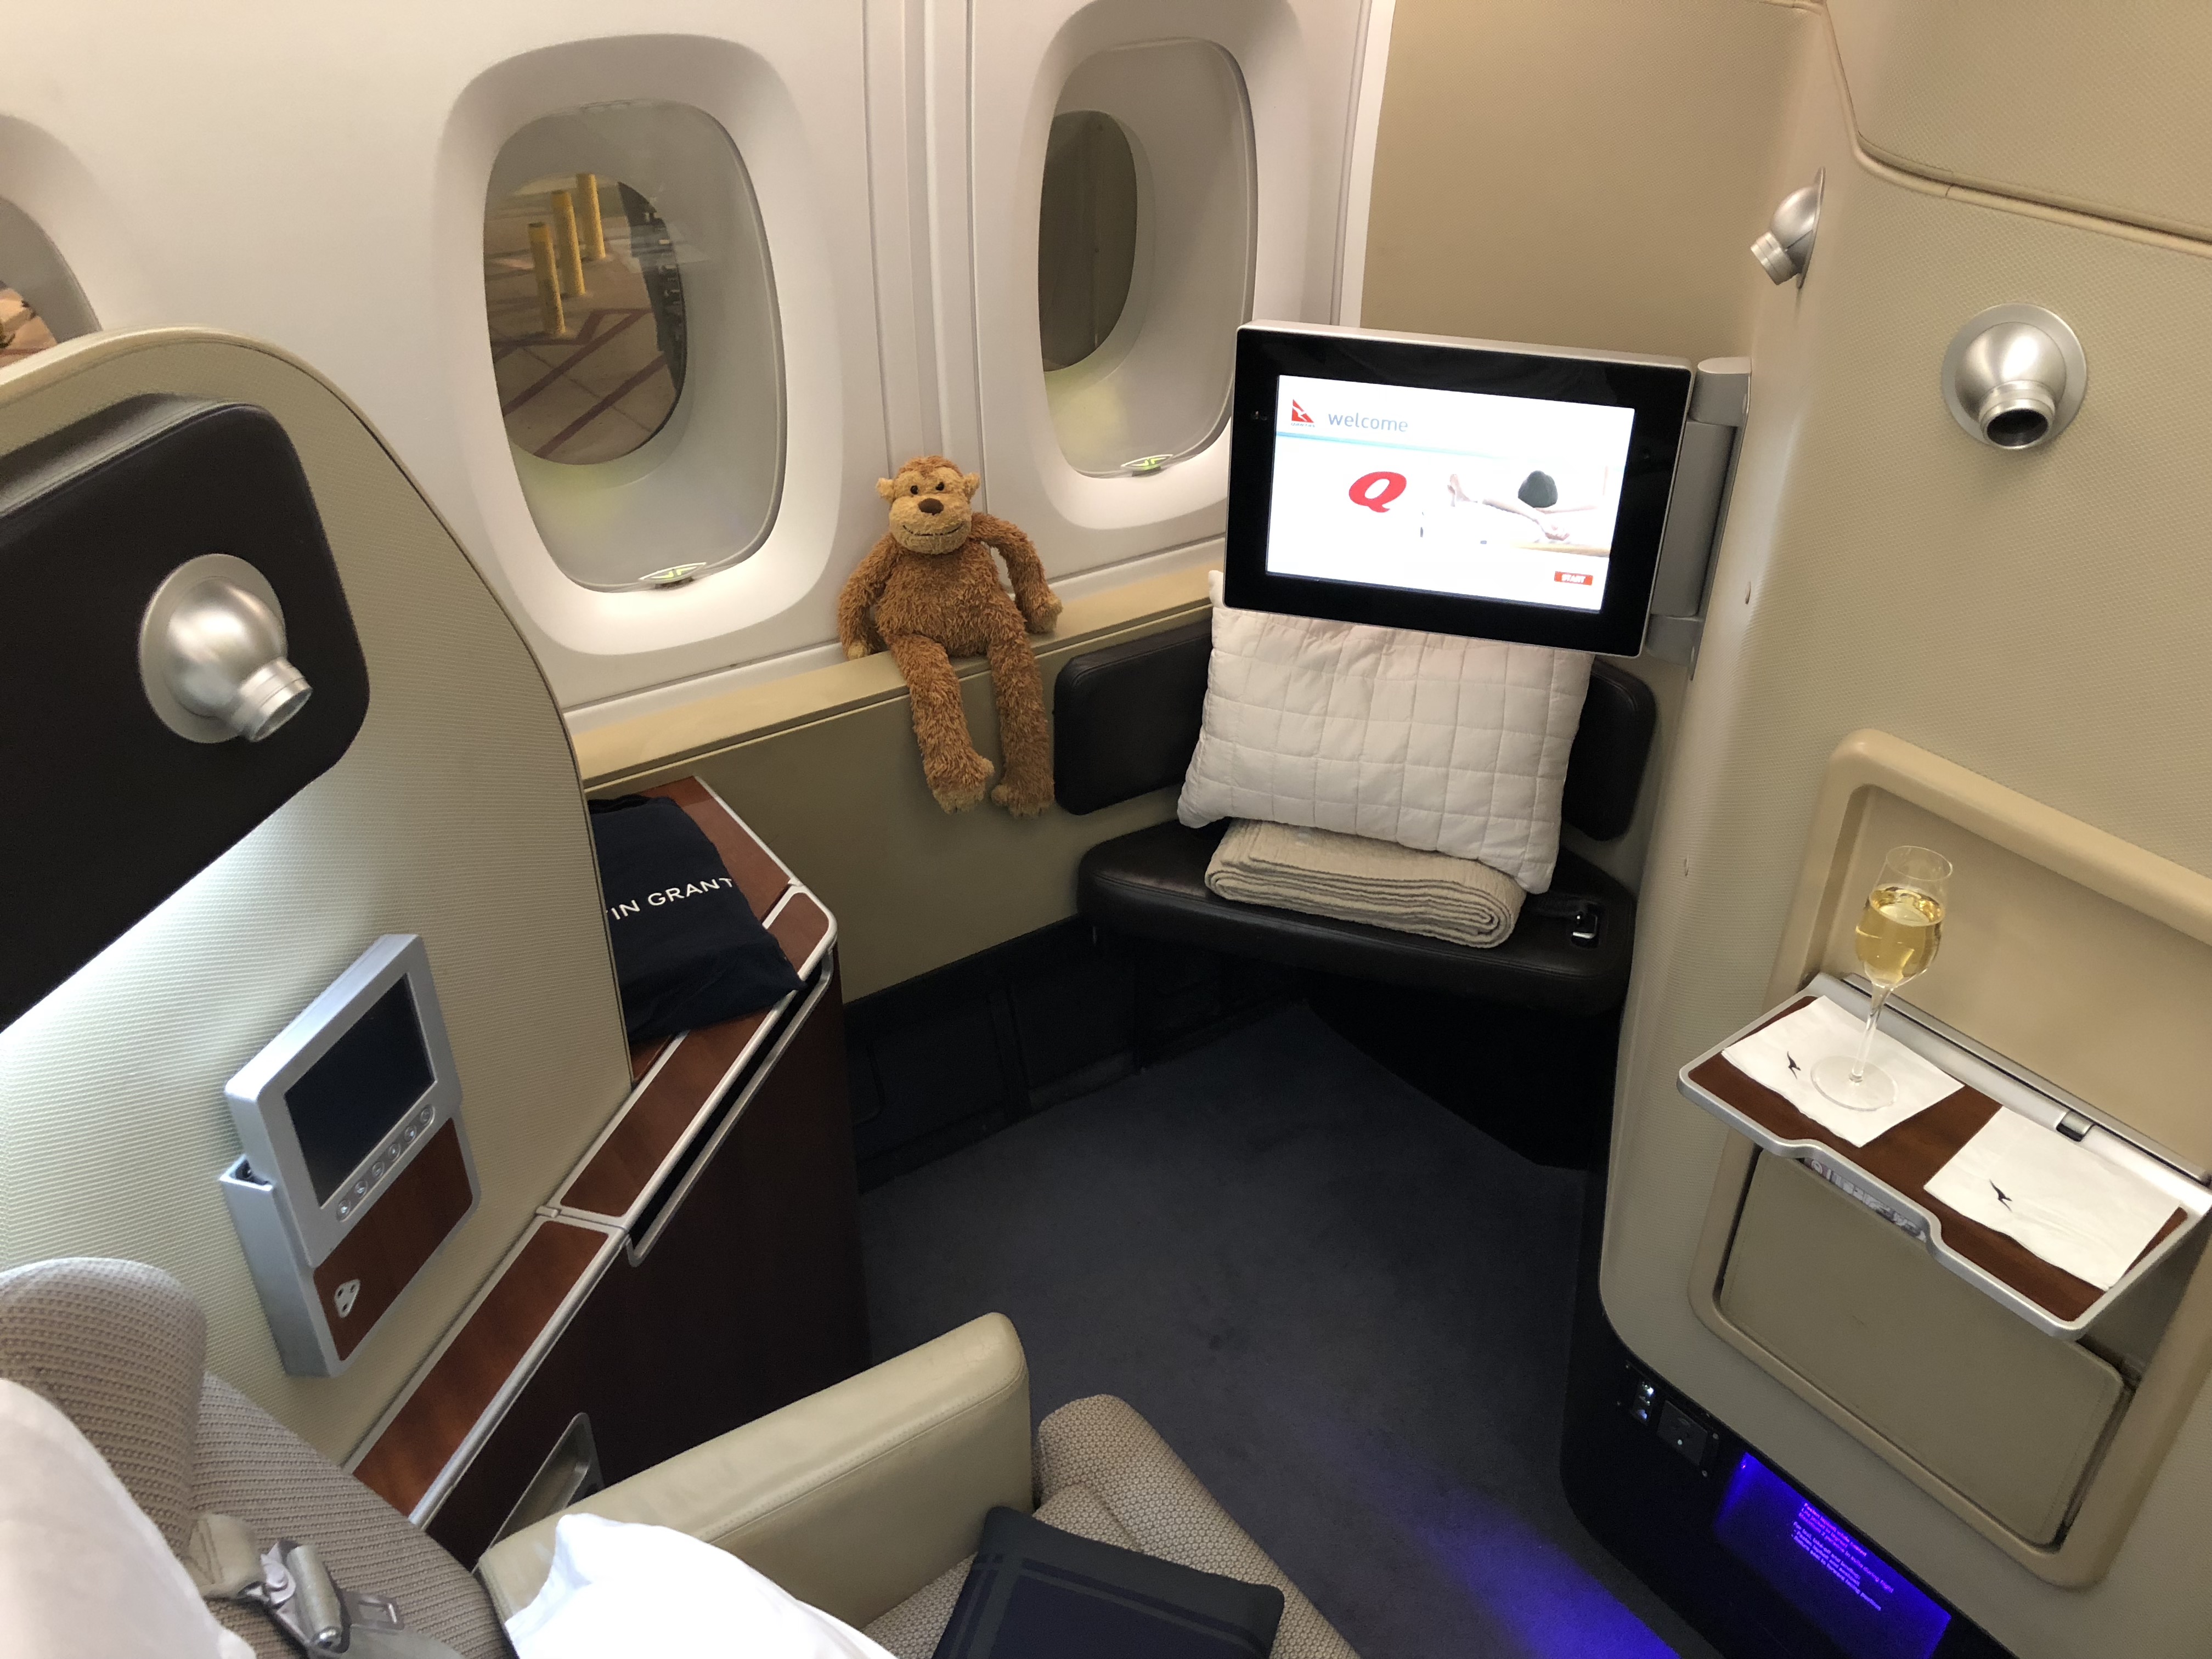 a teddy bear sitting on a window seat in an airplane